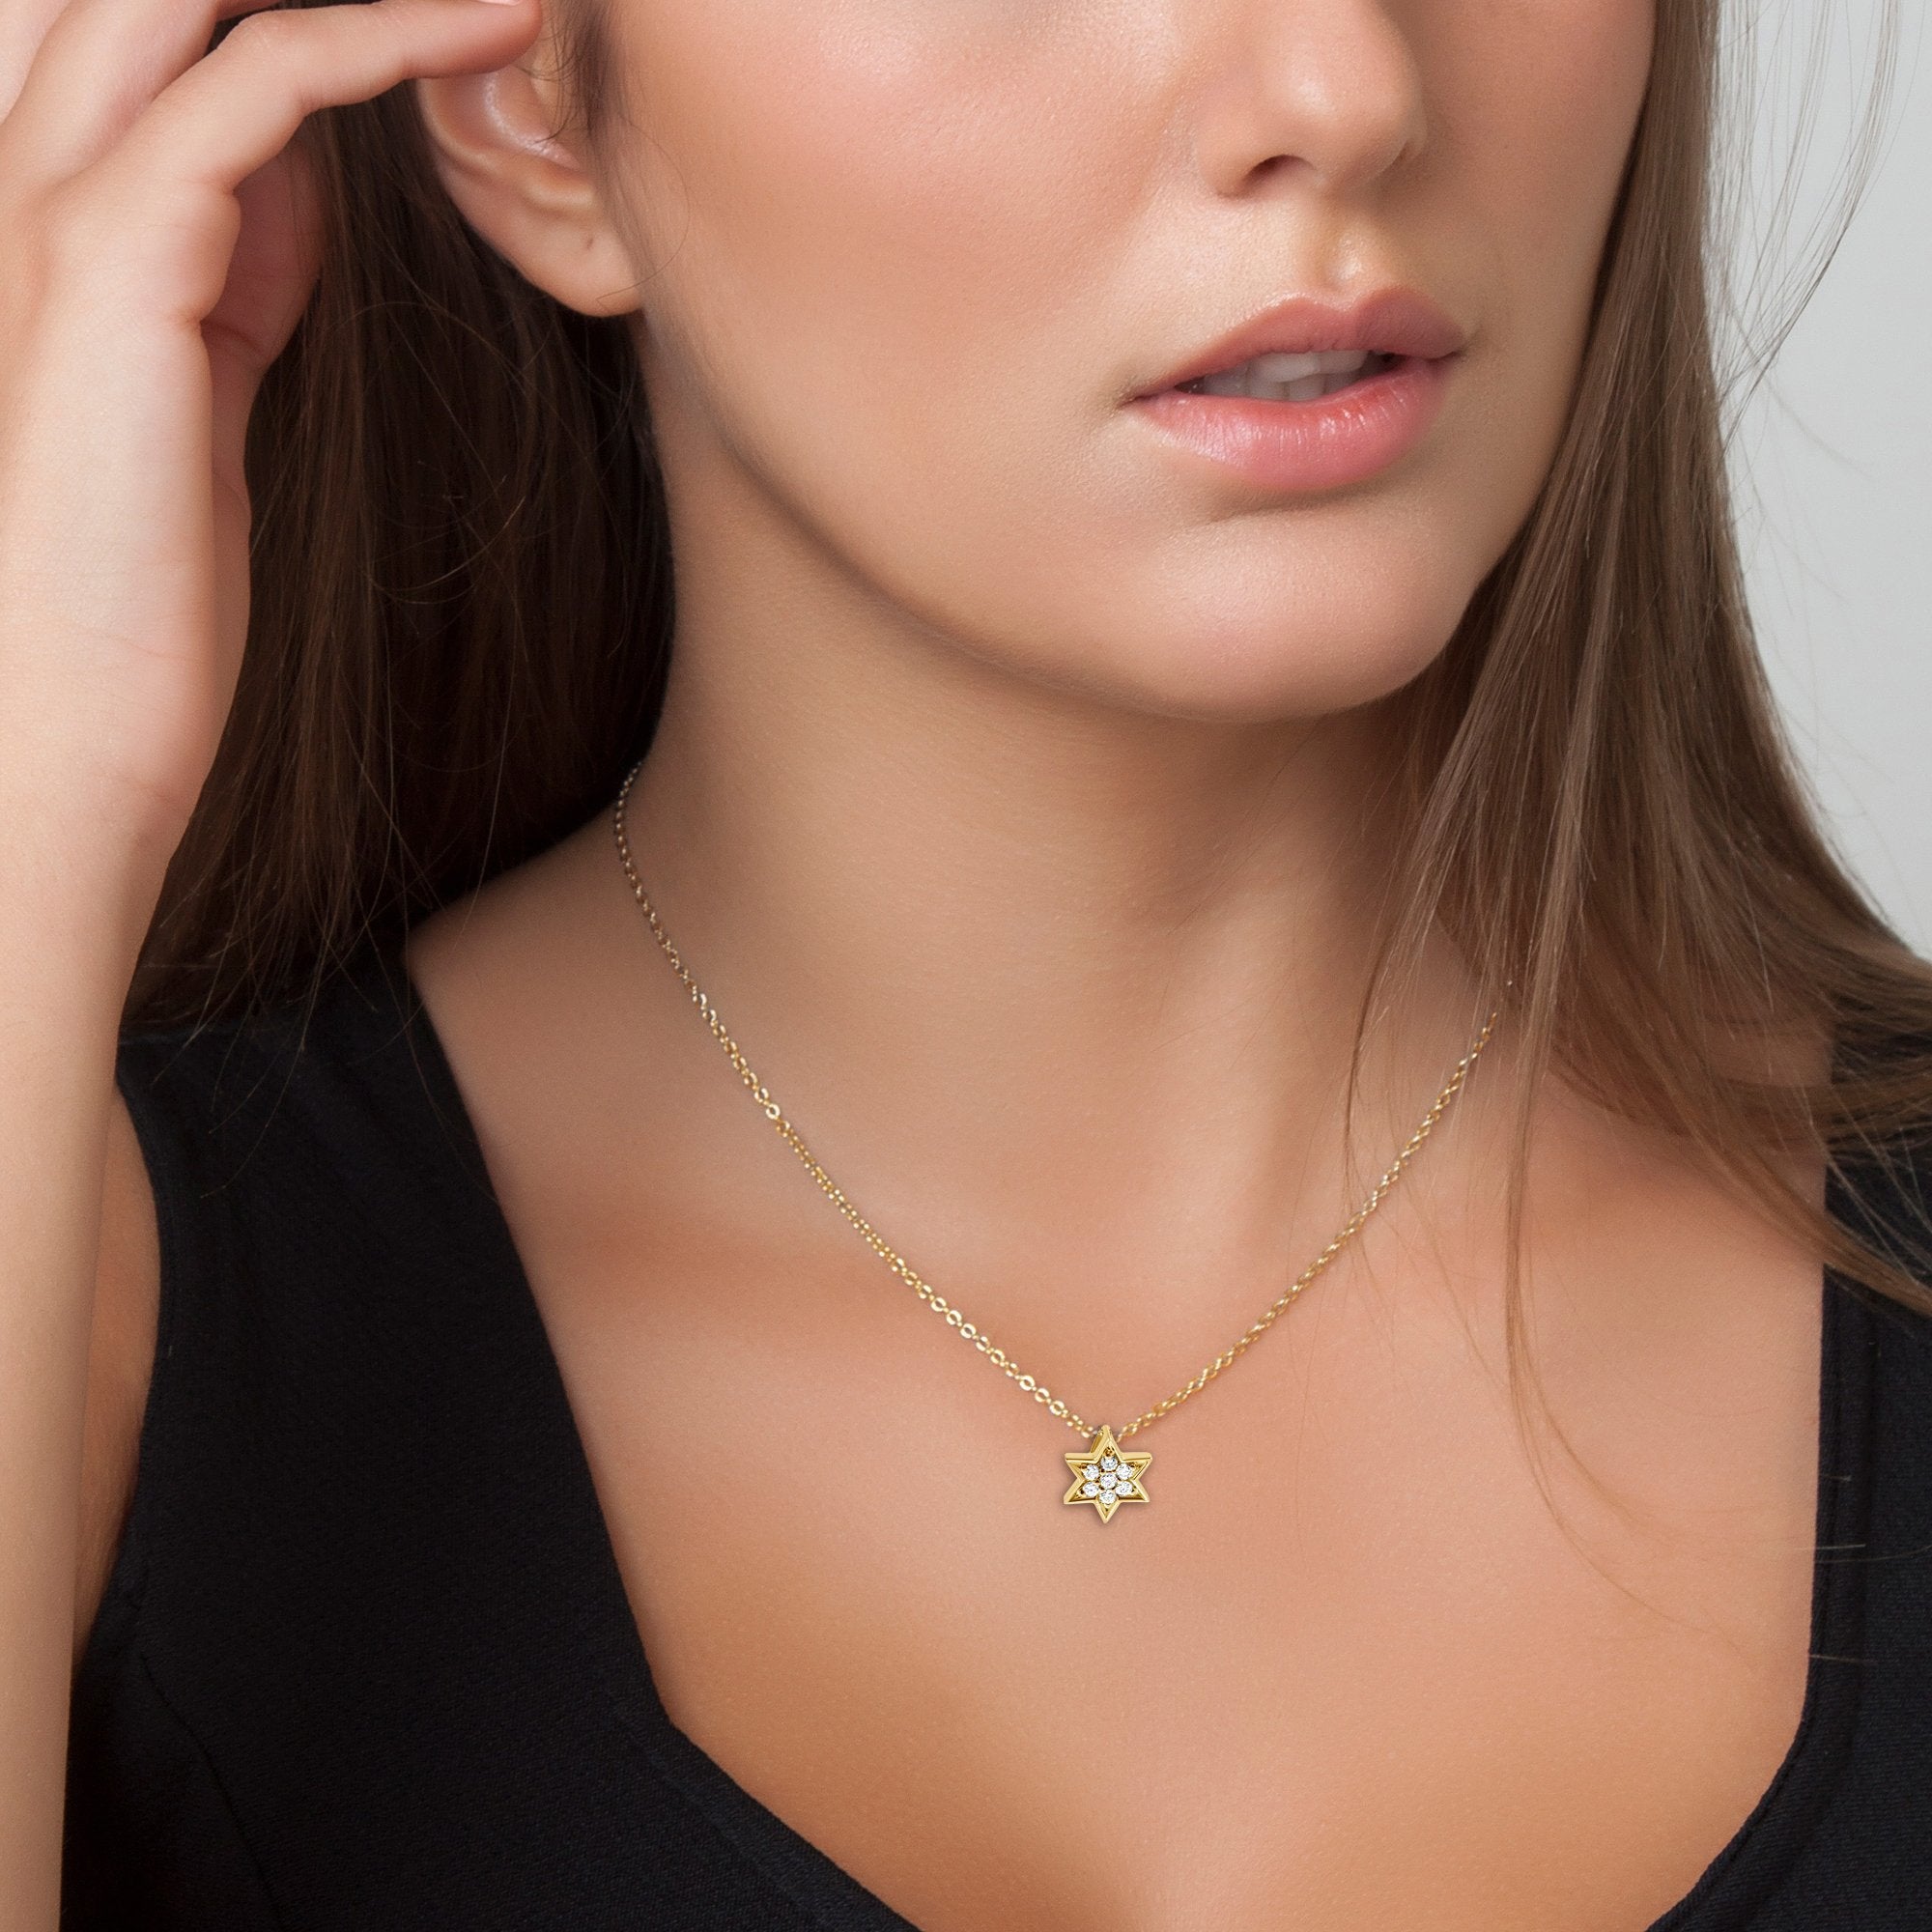 Jewish Jewelry - Orange Crystal Jewish Star Necklace, Made In Israel